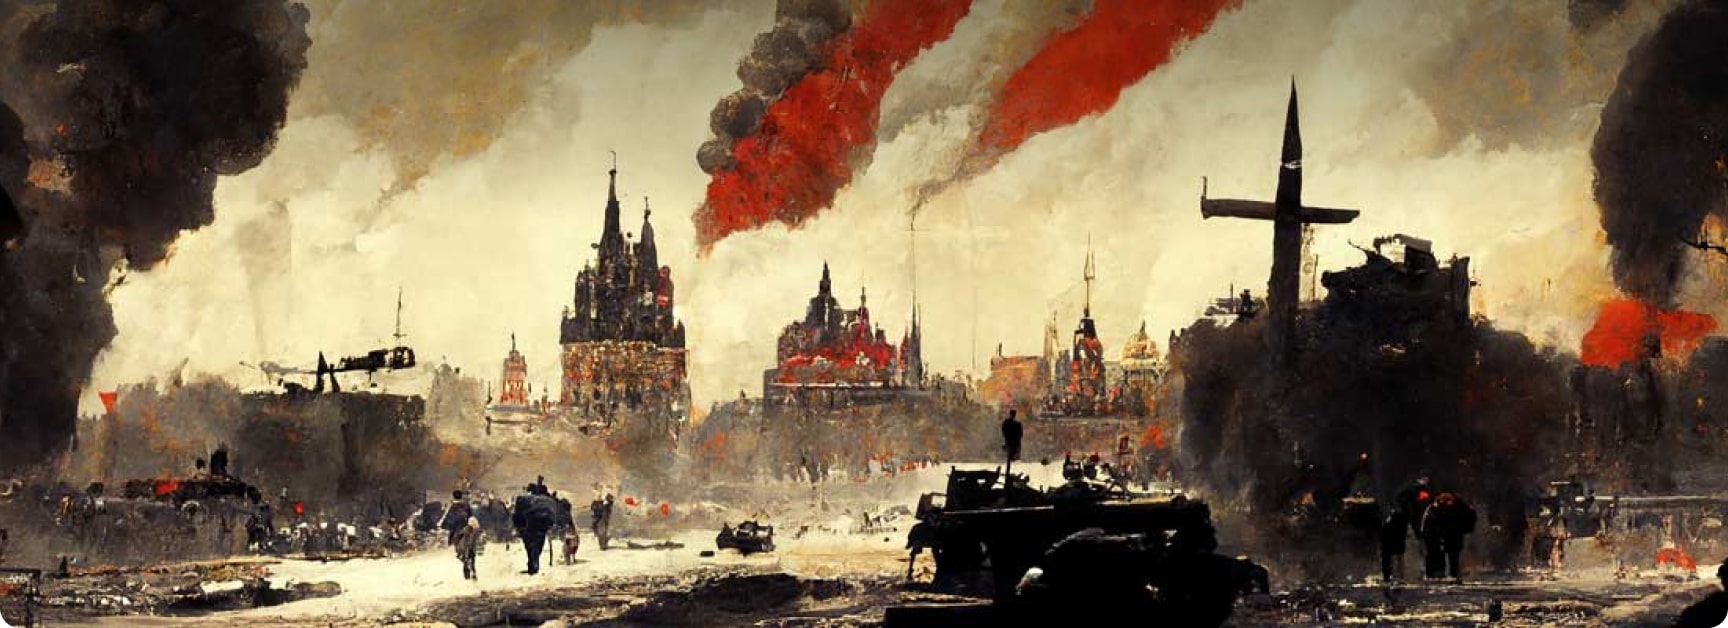 A smoldering army battle scene from World War I.